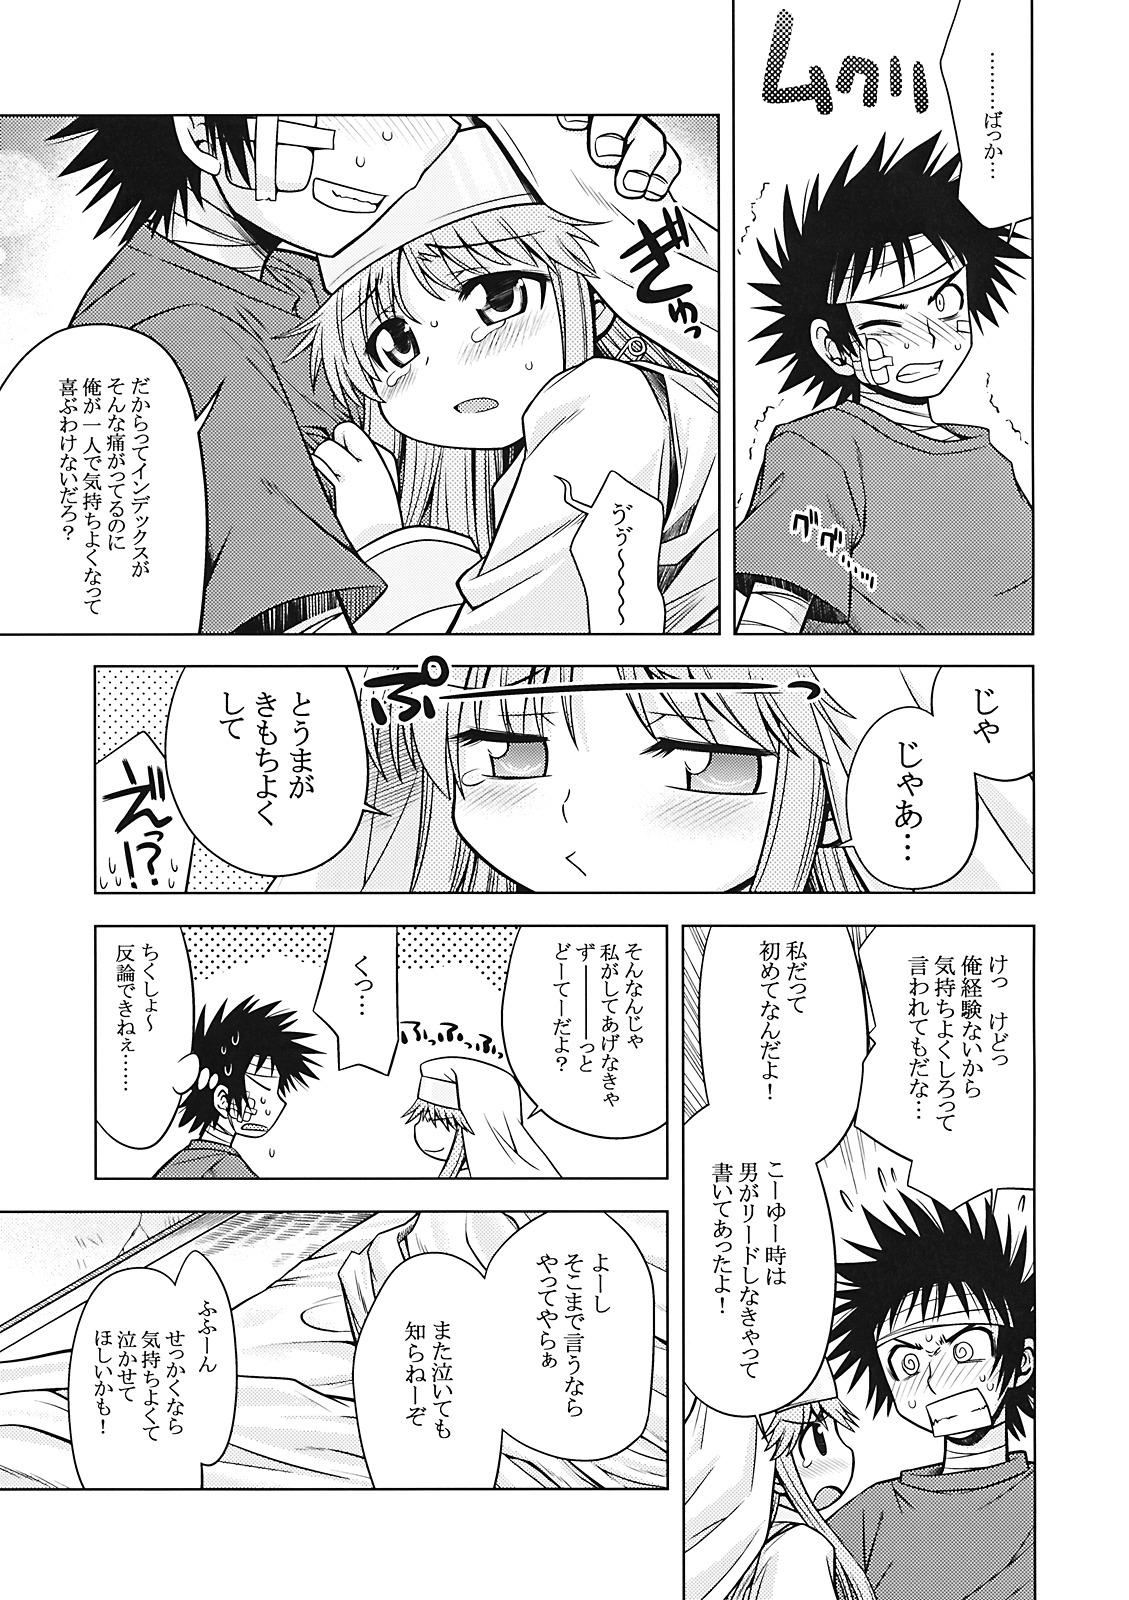 Heels Index no Ano ne - Toaru majutsu no index Face Sitting - Page 9